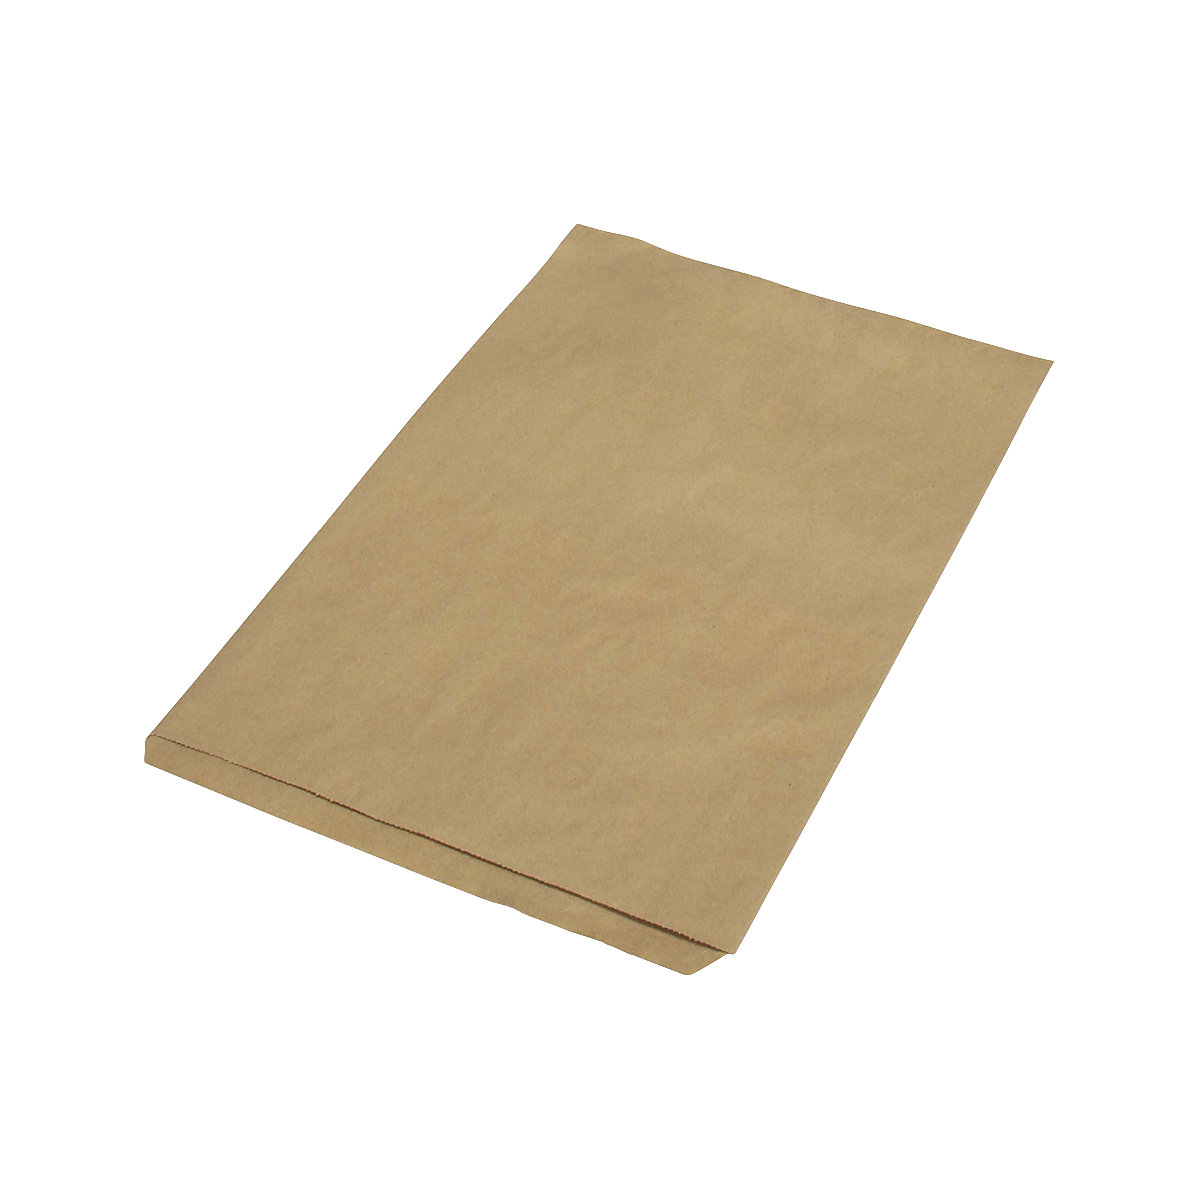 Flachbeutel terra, aus recyceltem Papier, LxB 350 x 230 mm, VE 1000 Stk, ab 5 VE-2